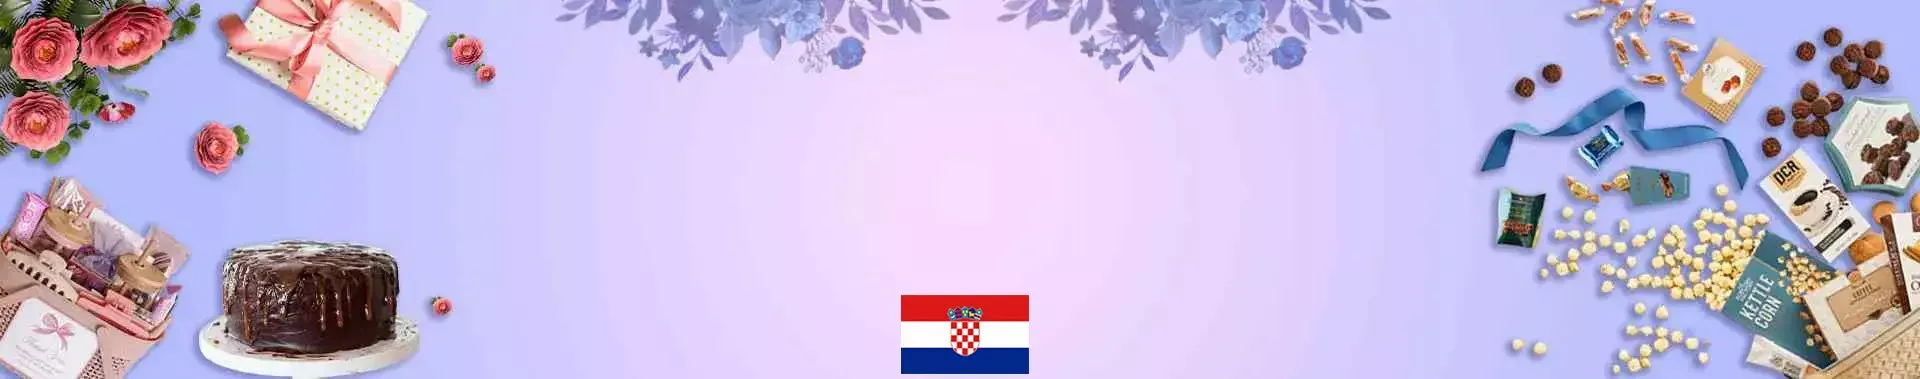 Send Gifts to Croatia, Gift Baskets to Croatia, Hampers to Croatia, Hampers & Gifts delivery in Croatia Online